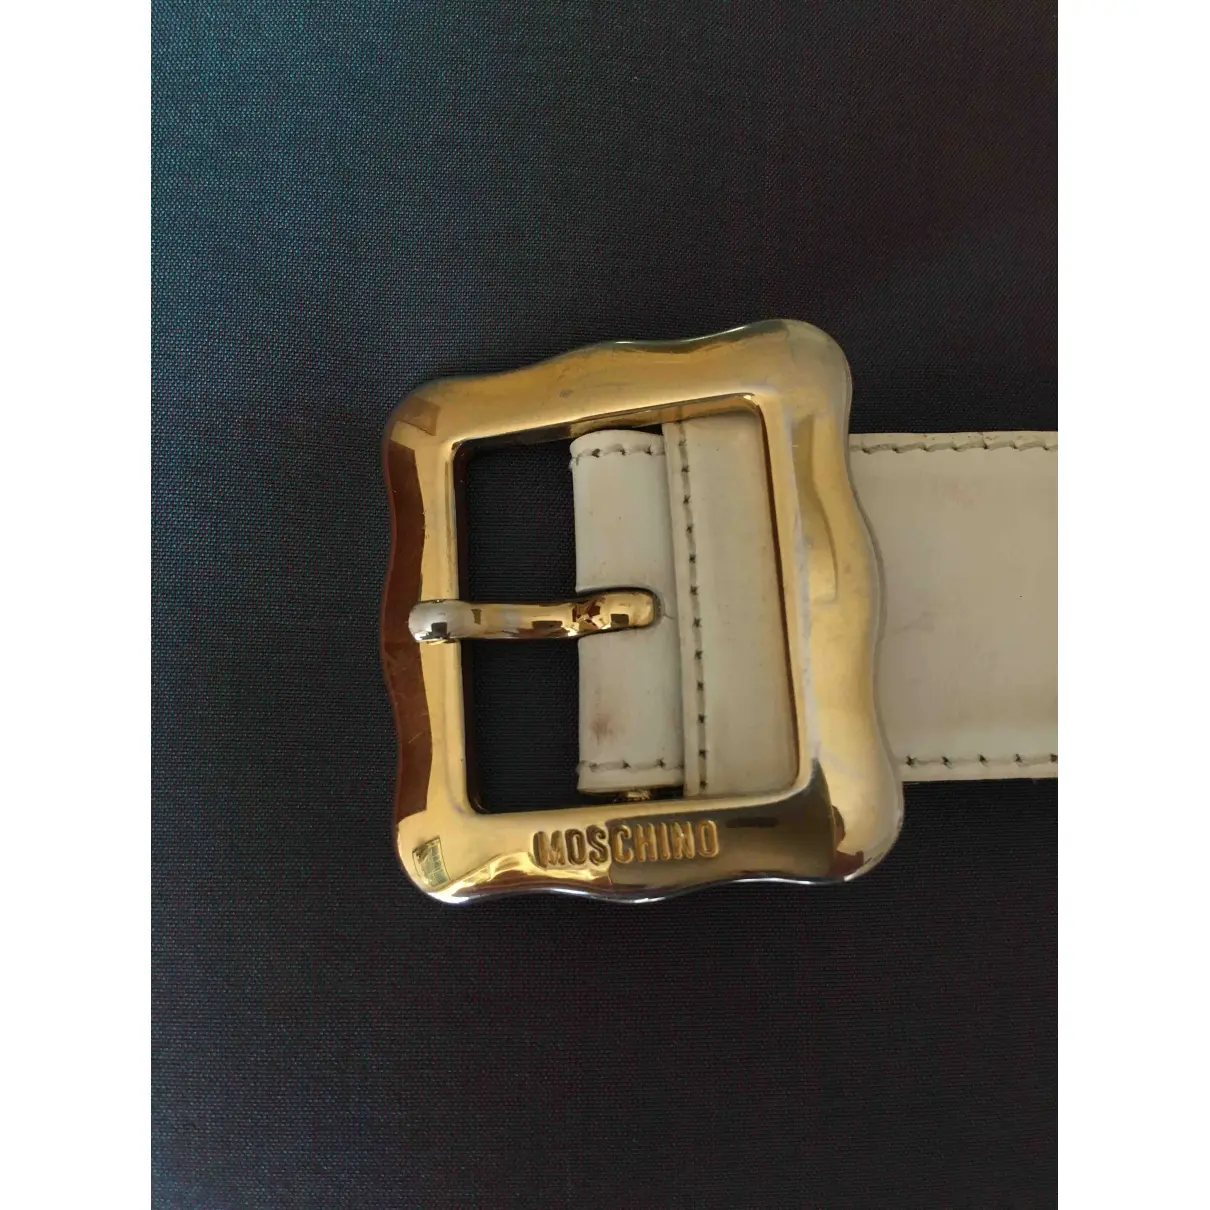 Buy Moschino Leather belt online - Vintage